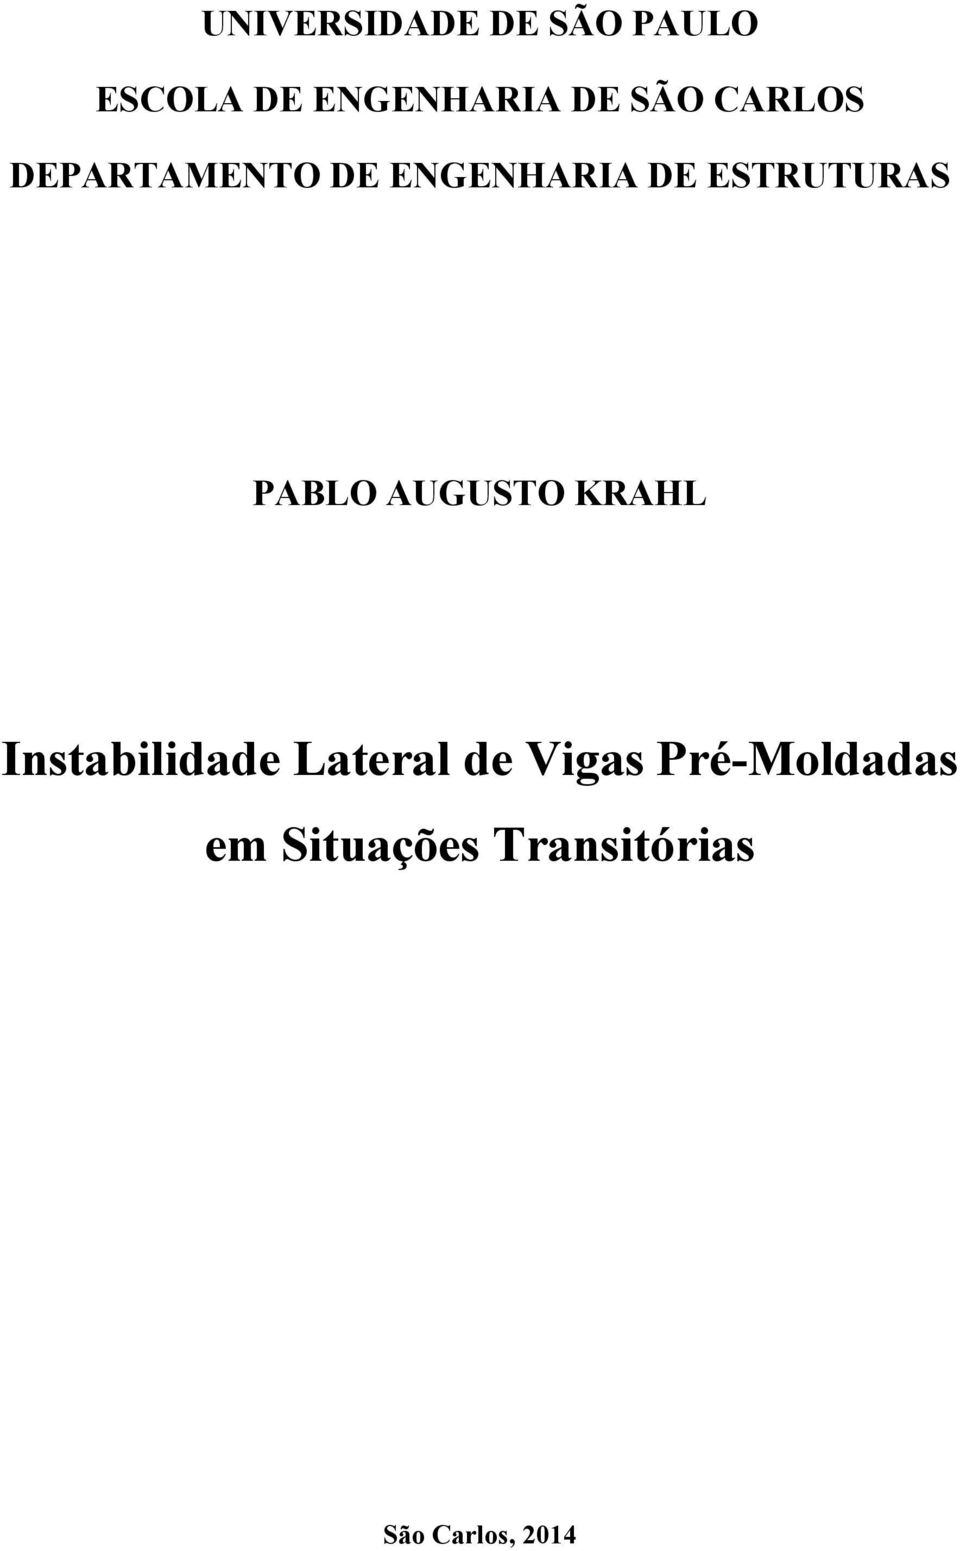 PABLO AUGUSTO KRAHL Instabilidade Lateral de Vigas